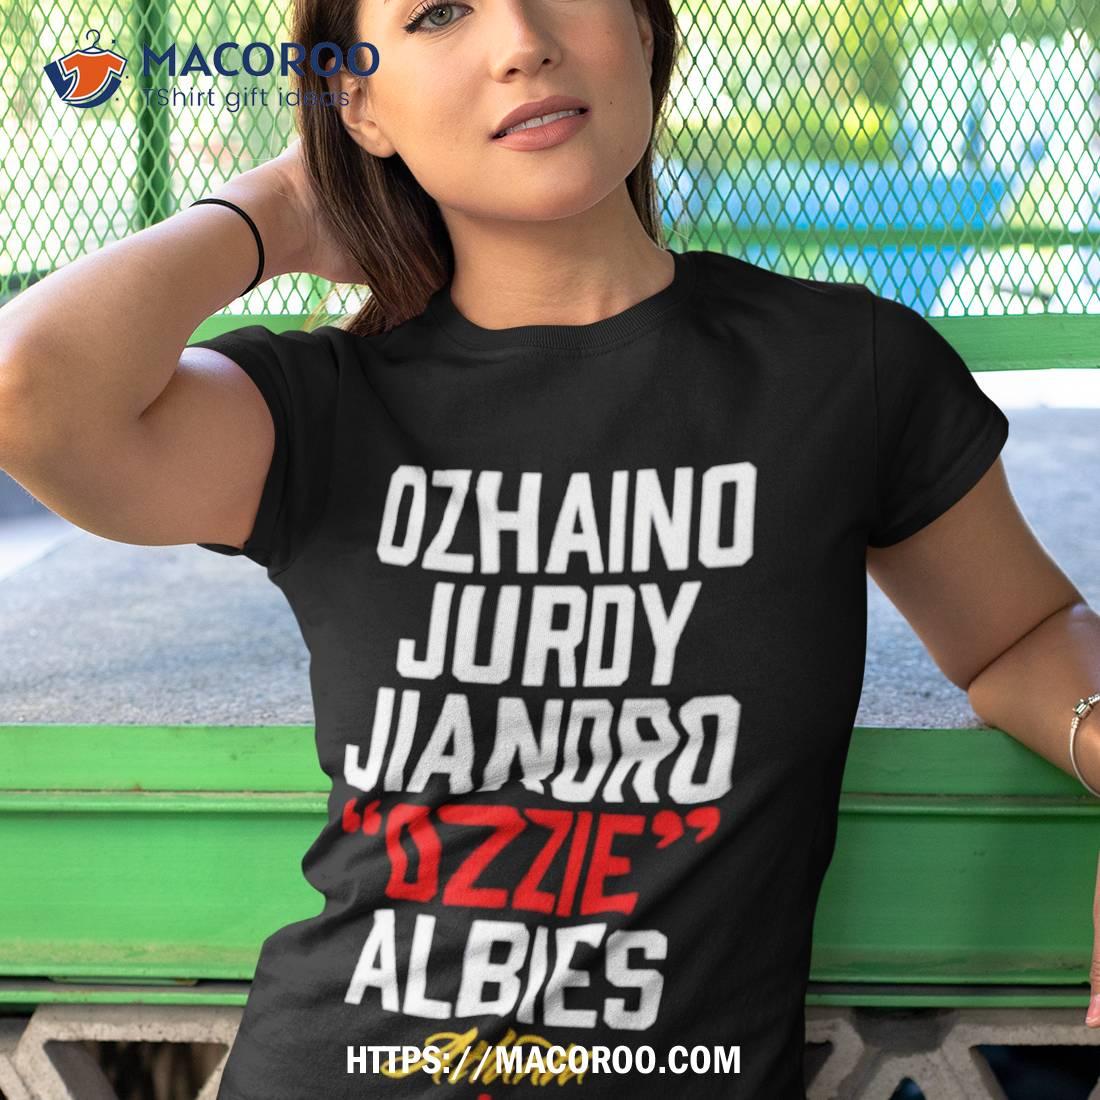 Ozzie Albies I Love Him T-shirt